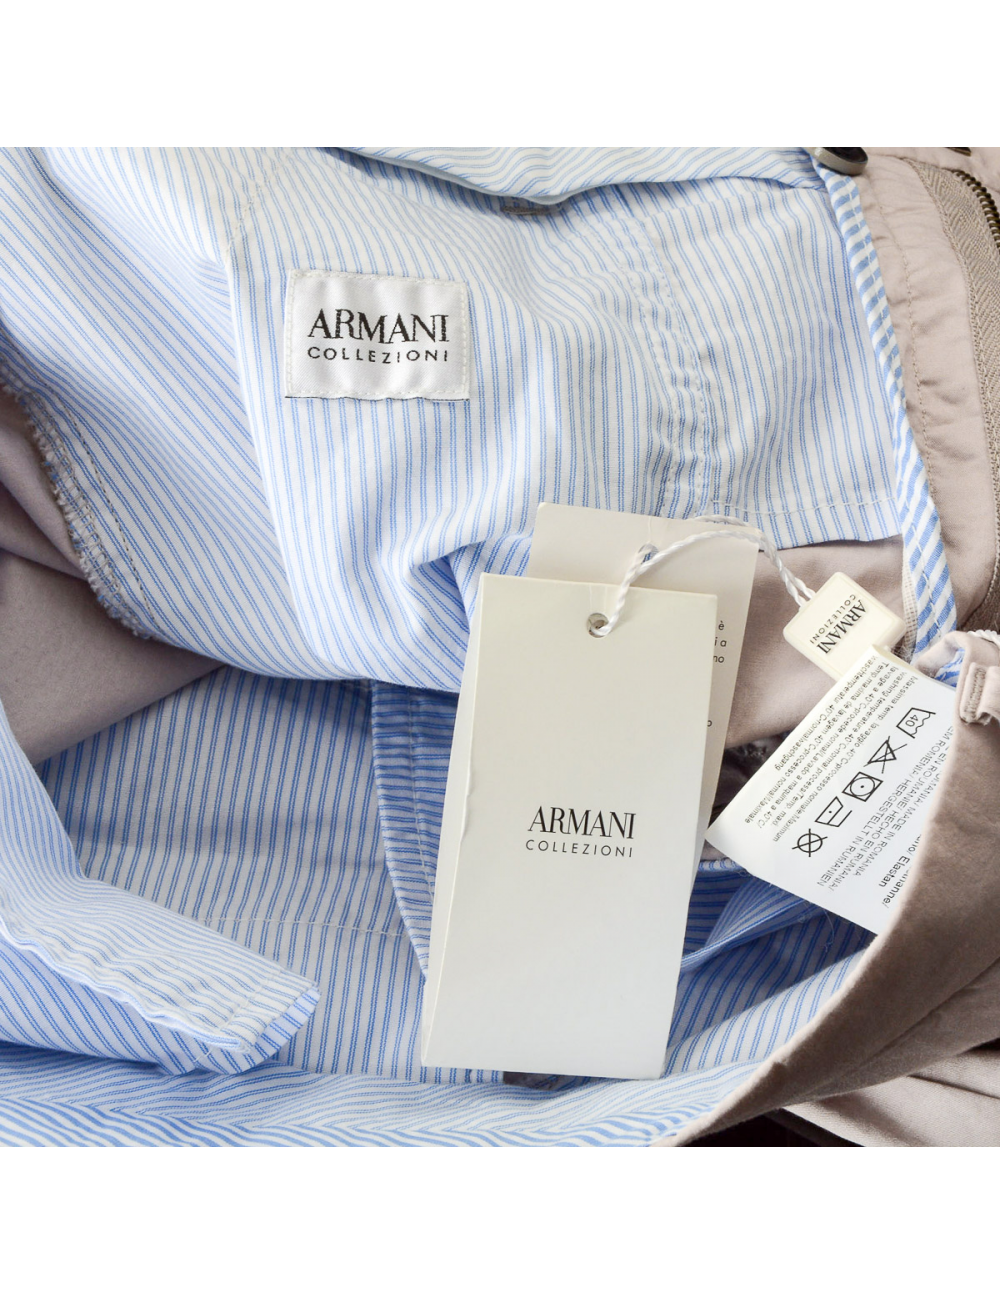 Armani Collezioni Mens Pants Grey - YuppyCollections